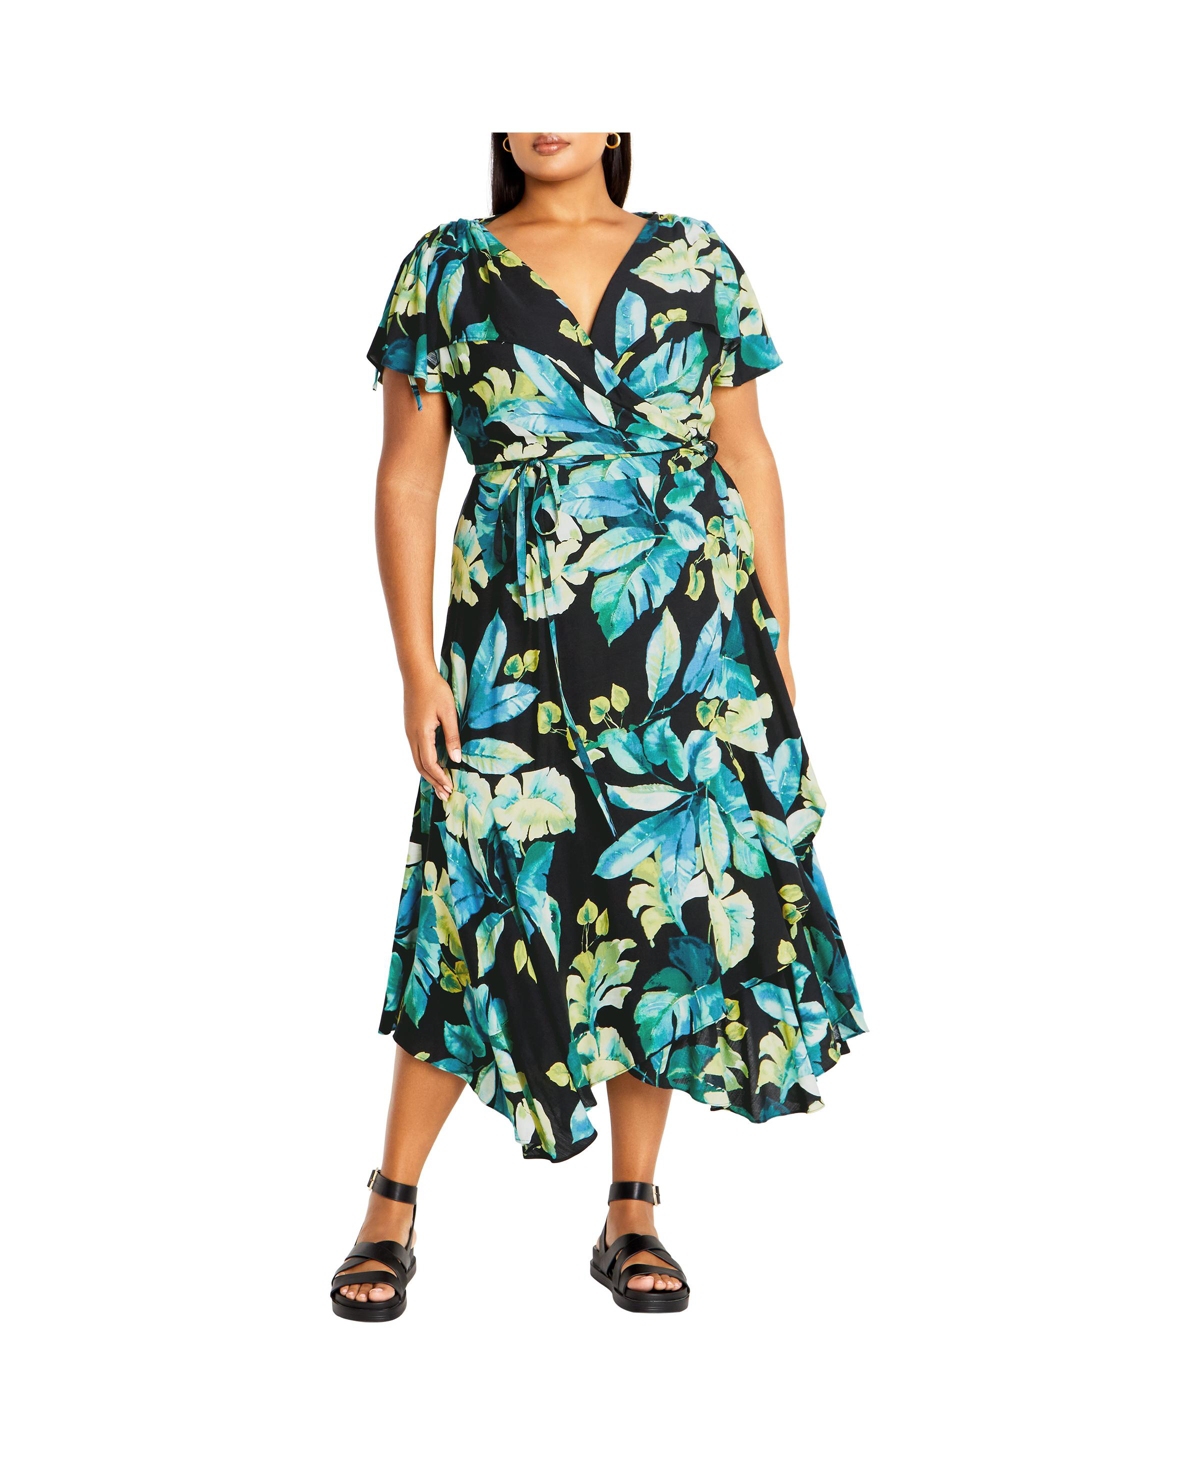 Plus Size Imogen Print Dress - Tropical oasis